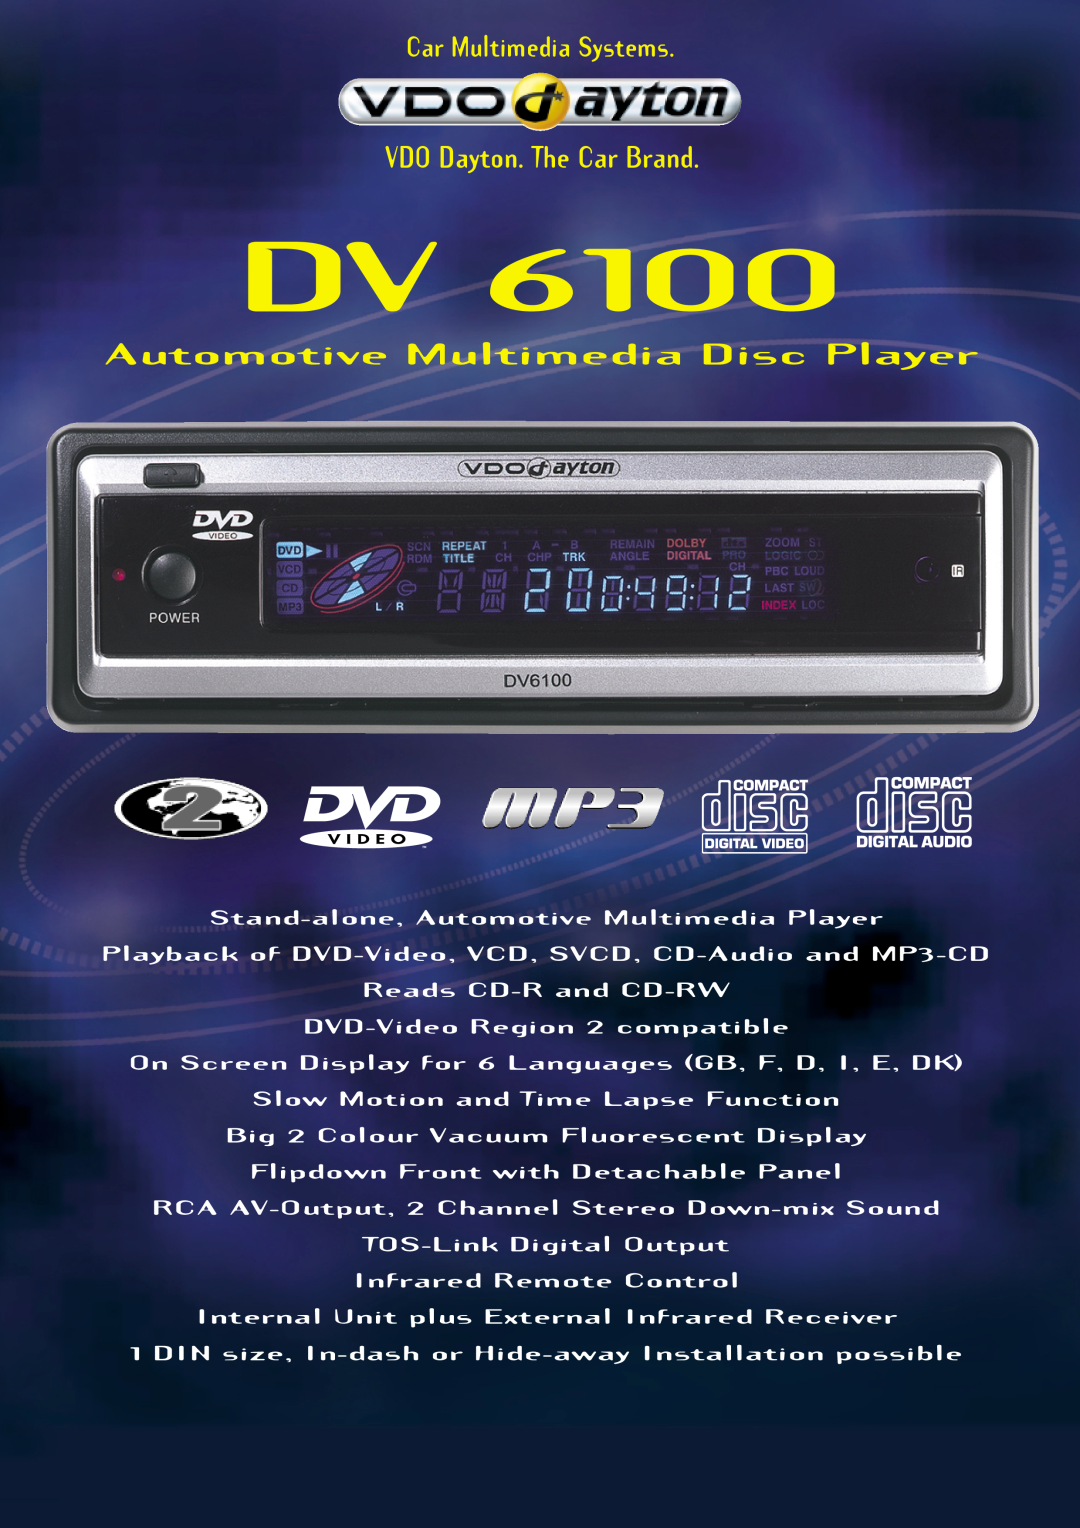 VDO Dayton DV 6100 manual VDO Dayton. The Car Brand, Car Multimedia Systems, Automotive Multimedia Disc Player 